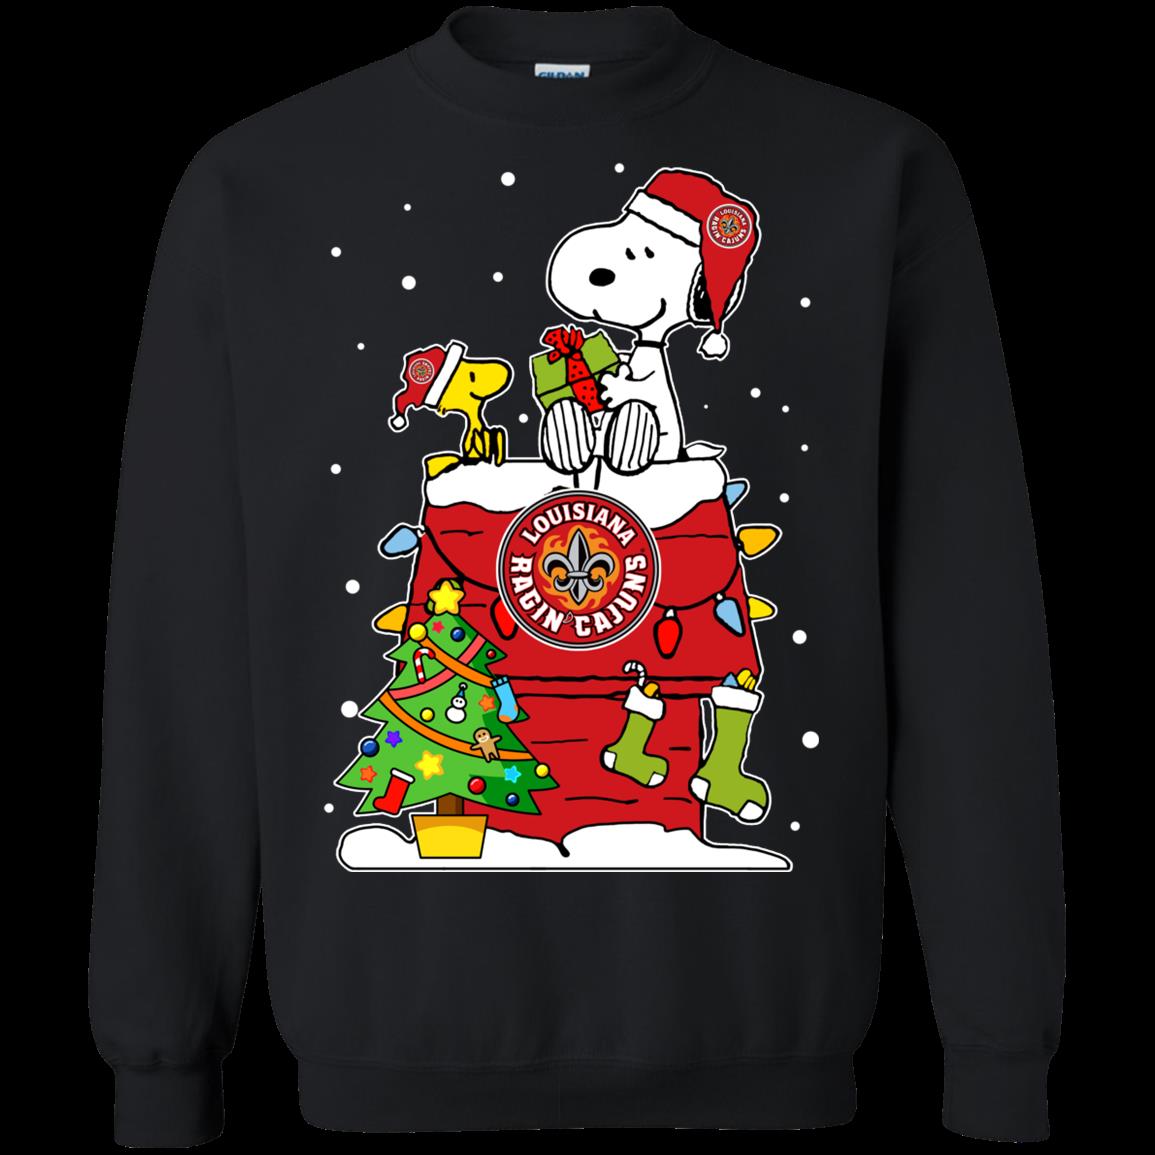 Louisiana Lafayette Ragin Cajuns Ugly Christmas Sweaters Snoopy Woodstock Hoodies Sweatshirts